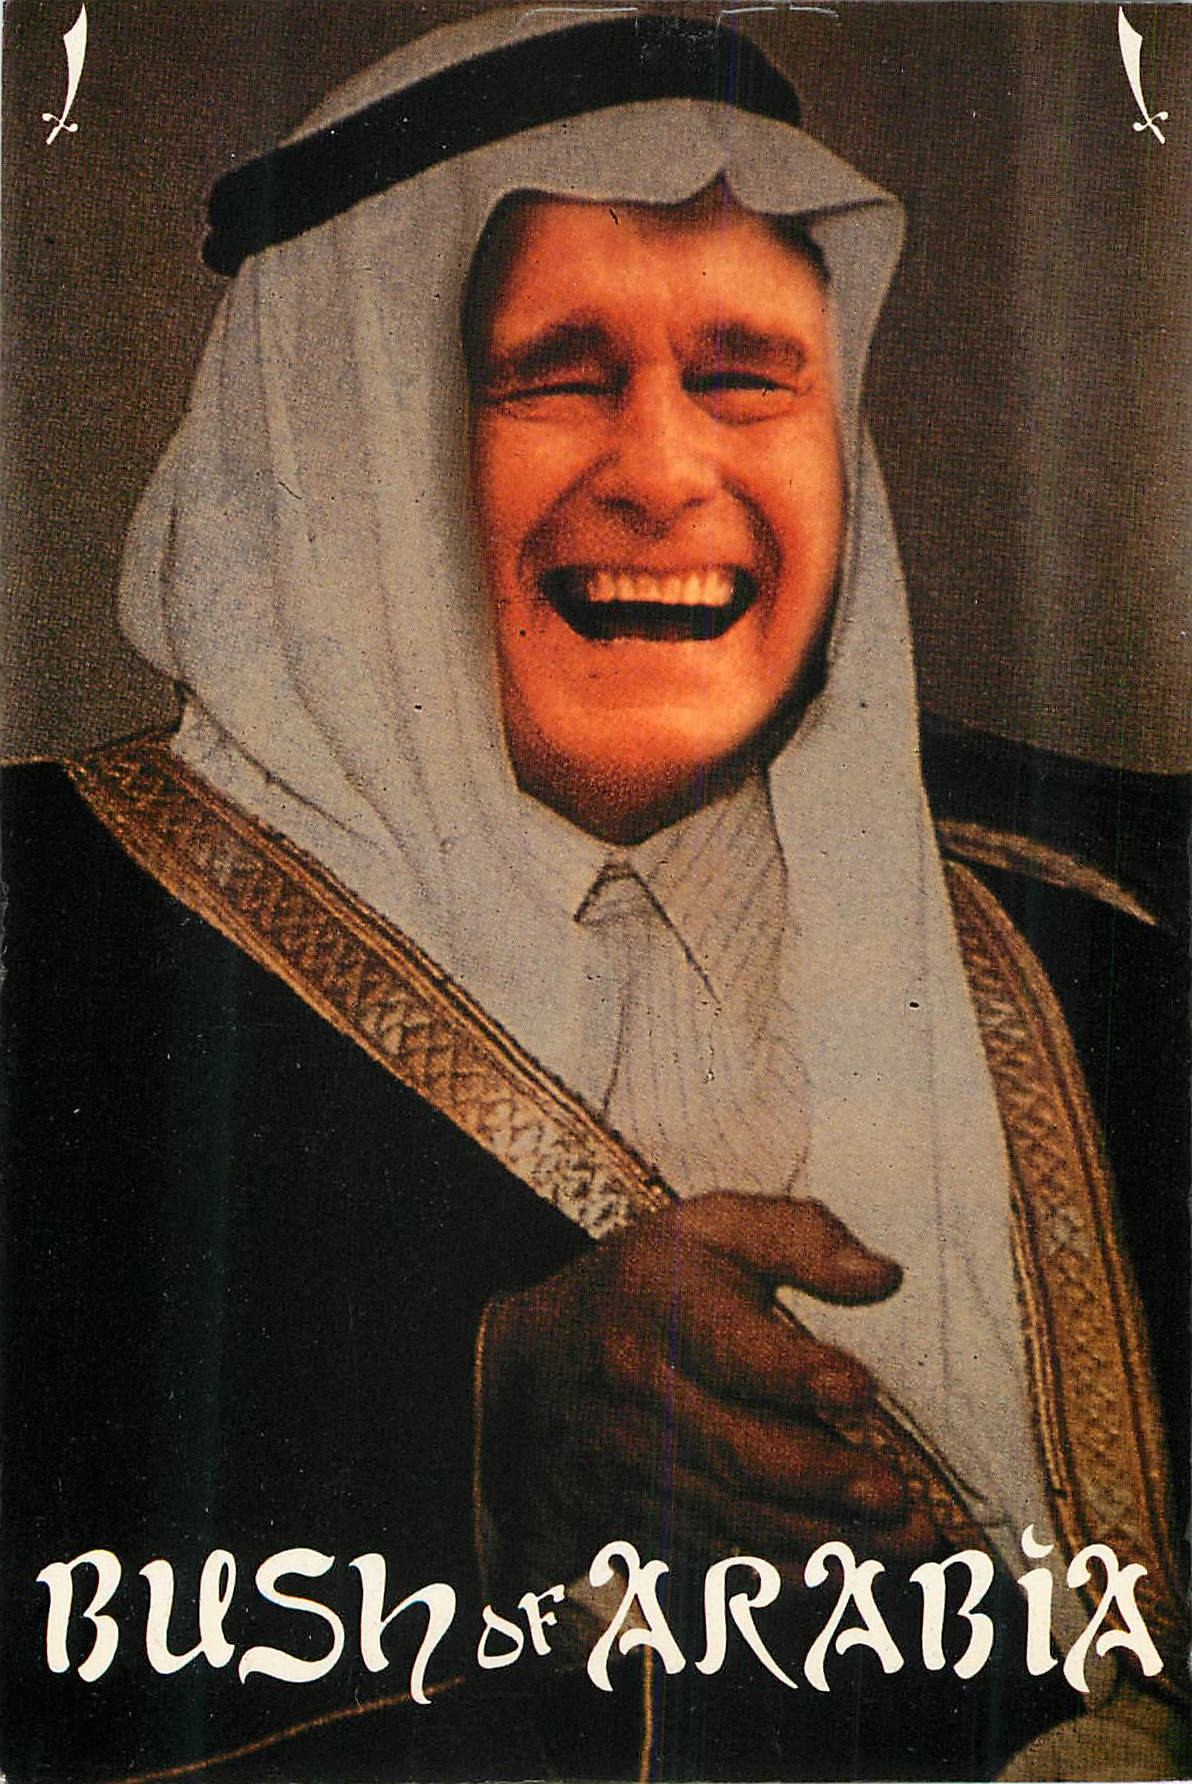 "Bush of Arabia"